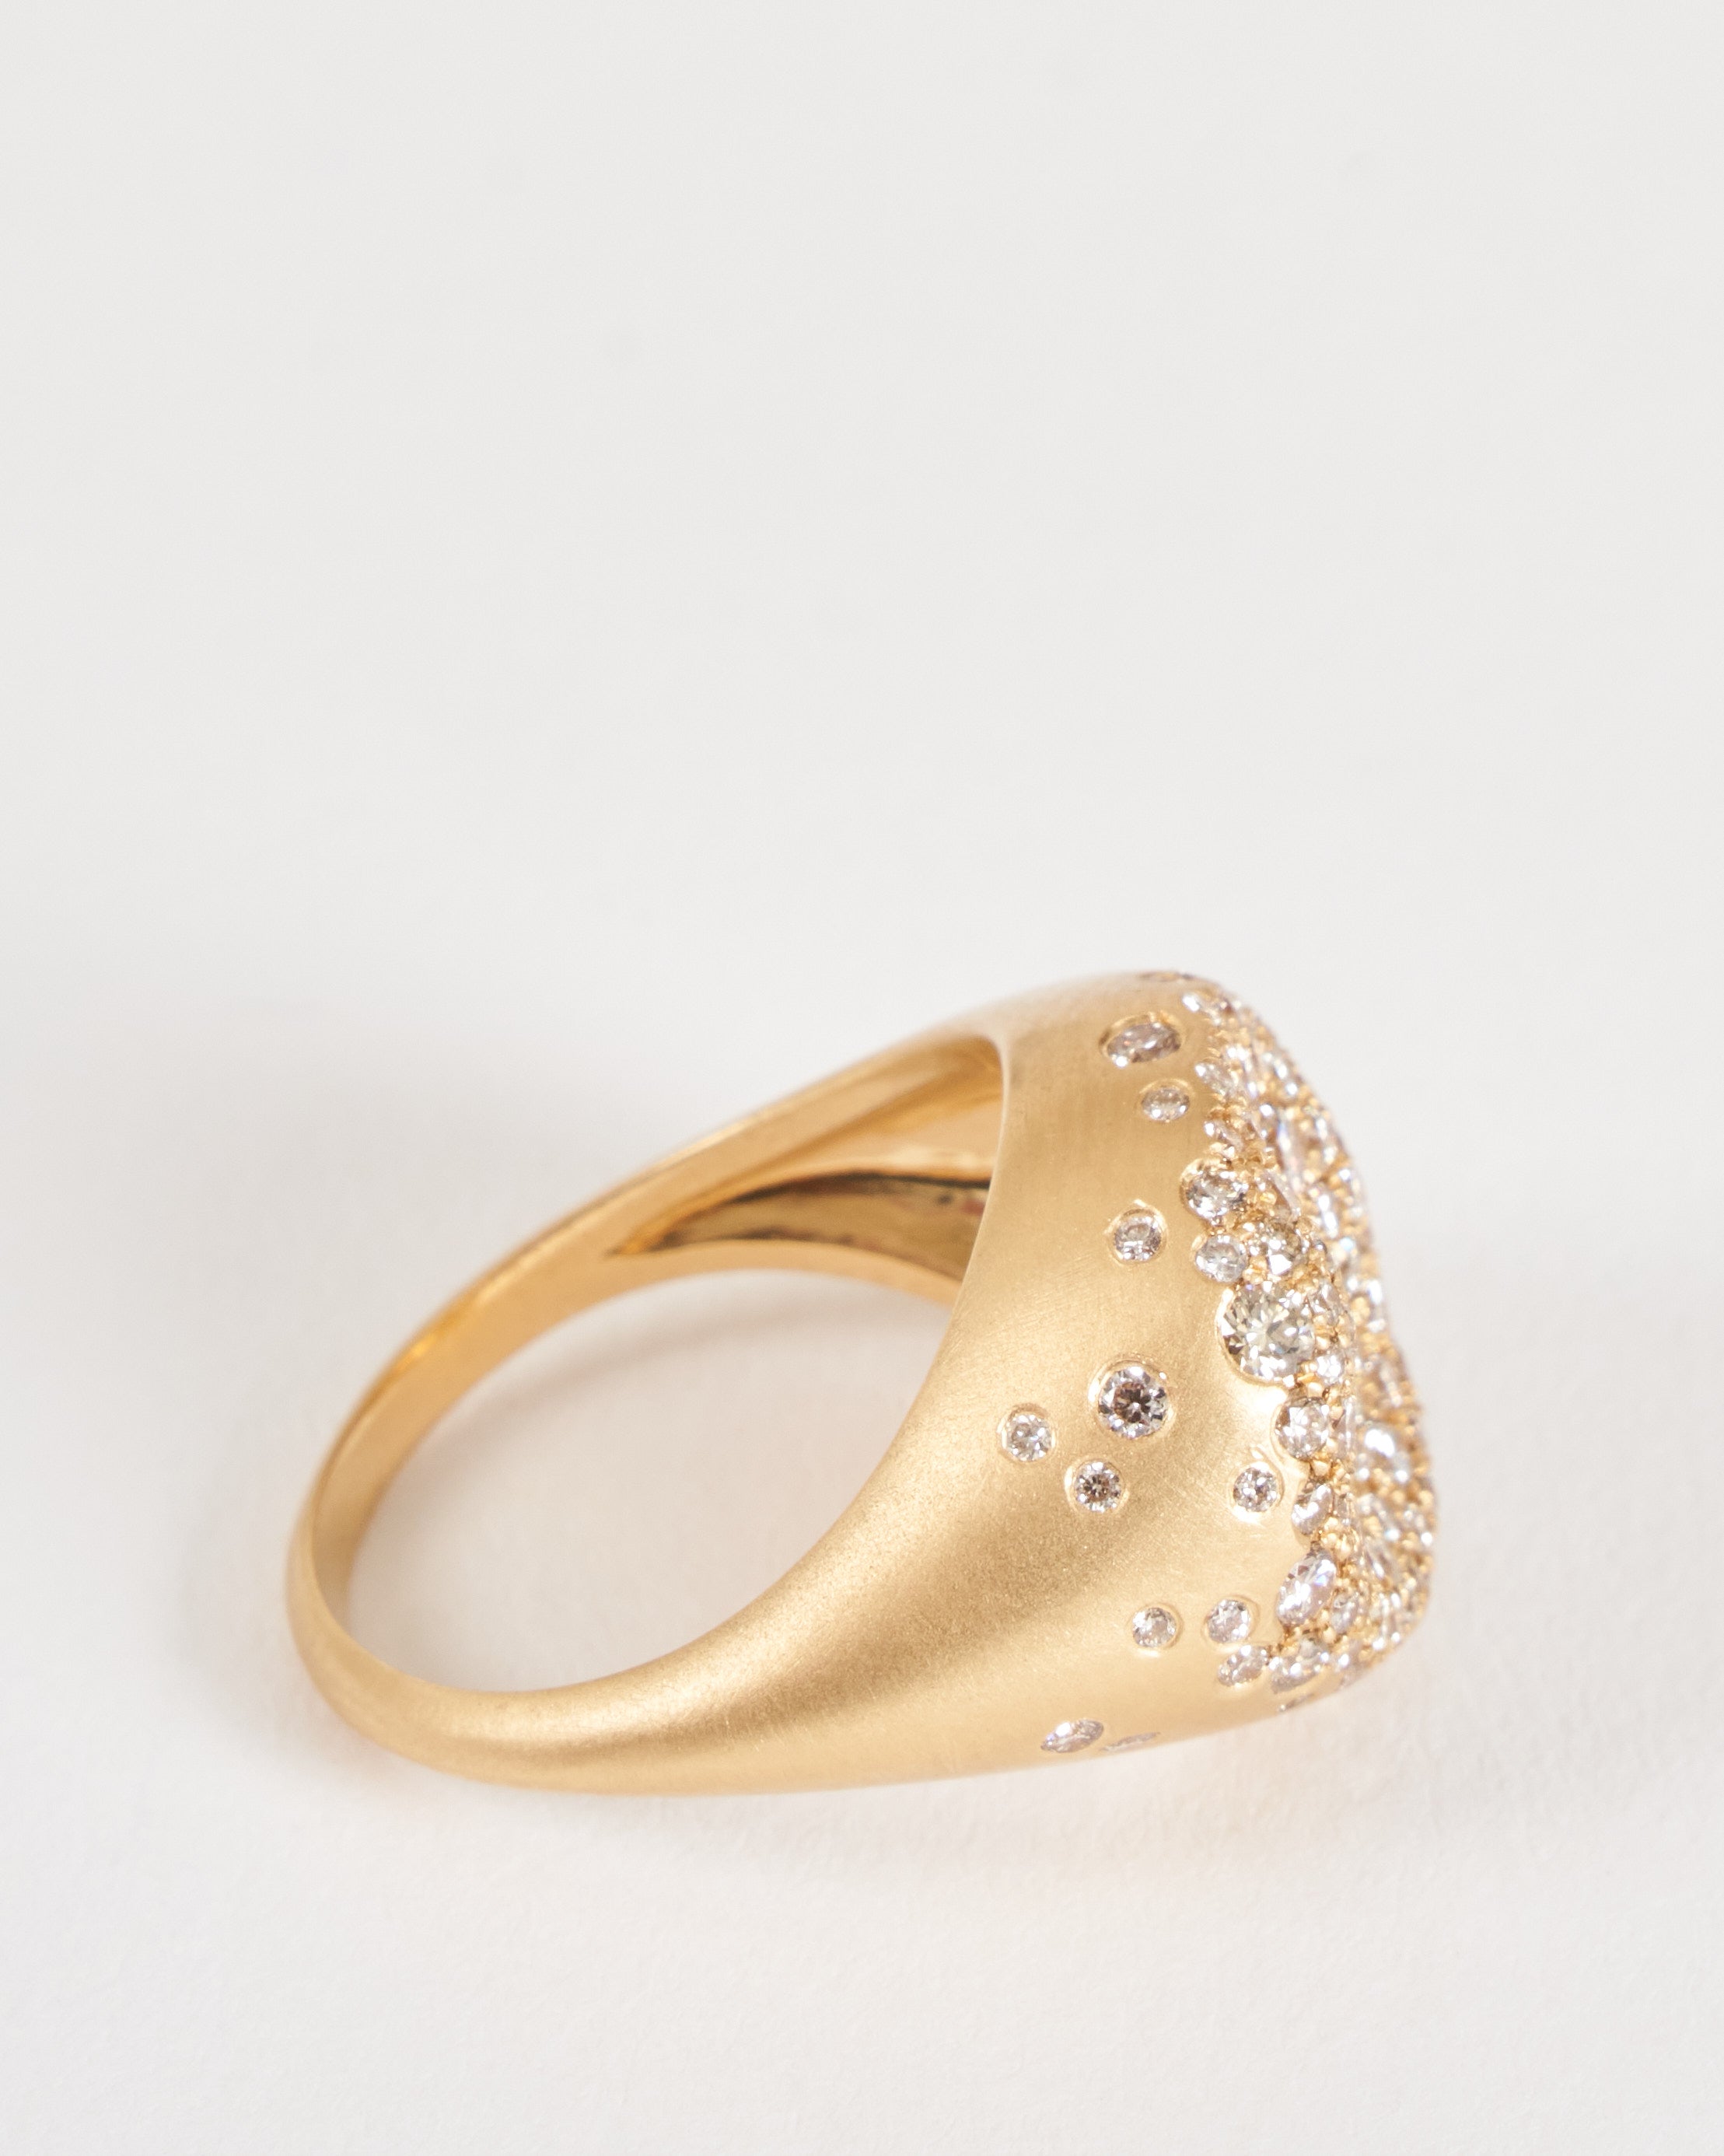 Pin by priya makam on Kids gold jewelry | Kids gold jewelry, Baby earrings, Baby  gold rings